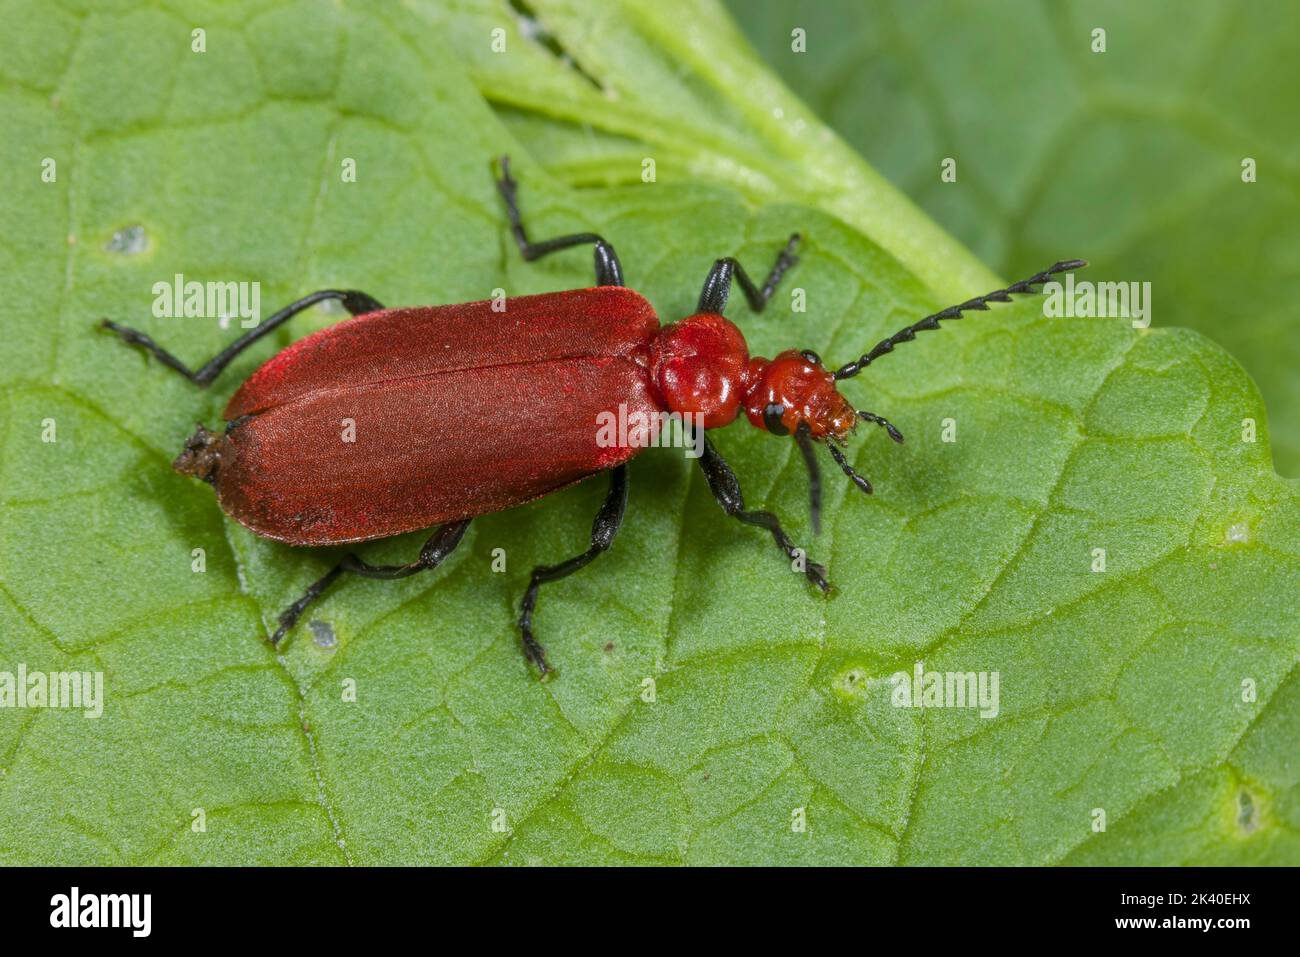 Cardinal Beetle, Cardinal Beetles, Red-headed cardinal beetle (Pyrochroa serraticornis), sits on a leaf, Germany Stock Photo